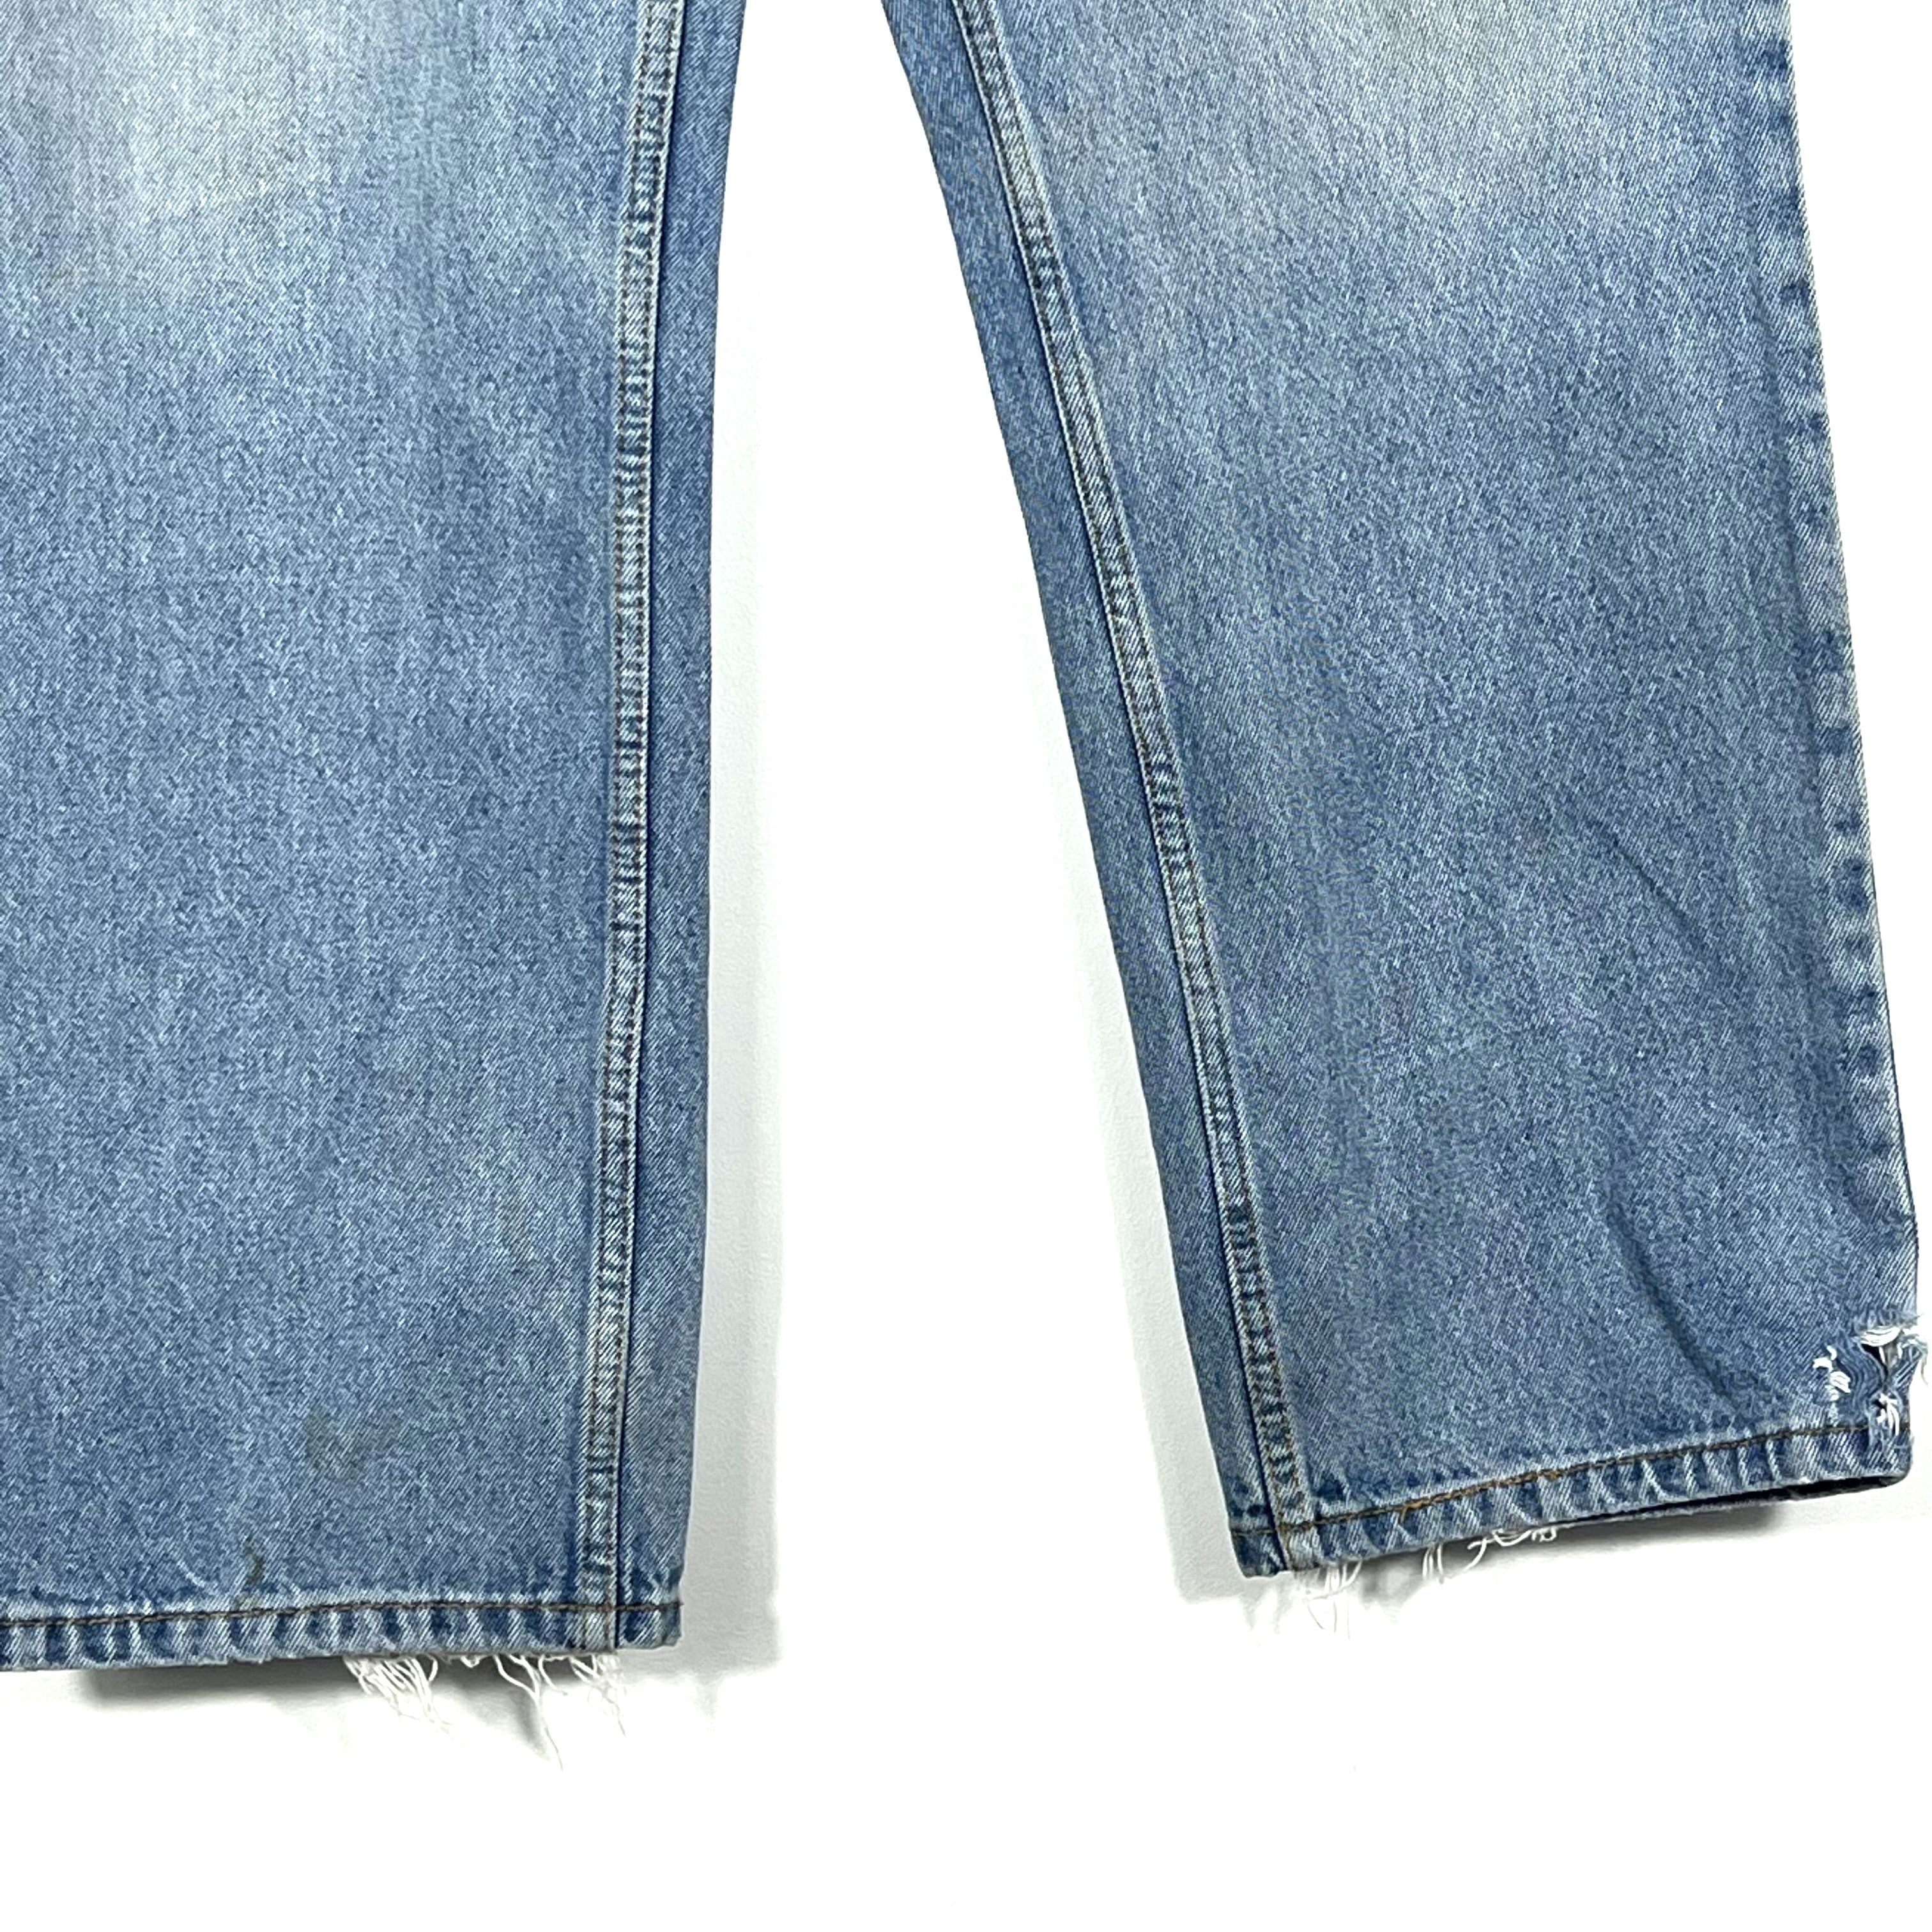 Vintage Levis Orange Tab Jeans - Men's 36/30